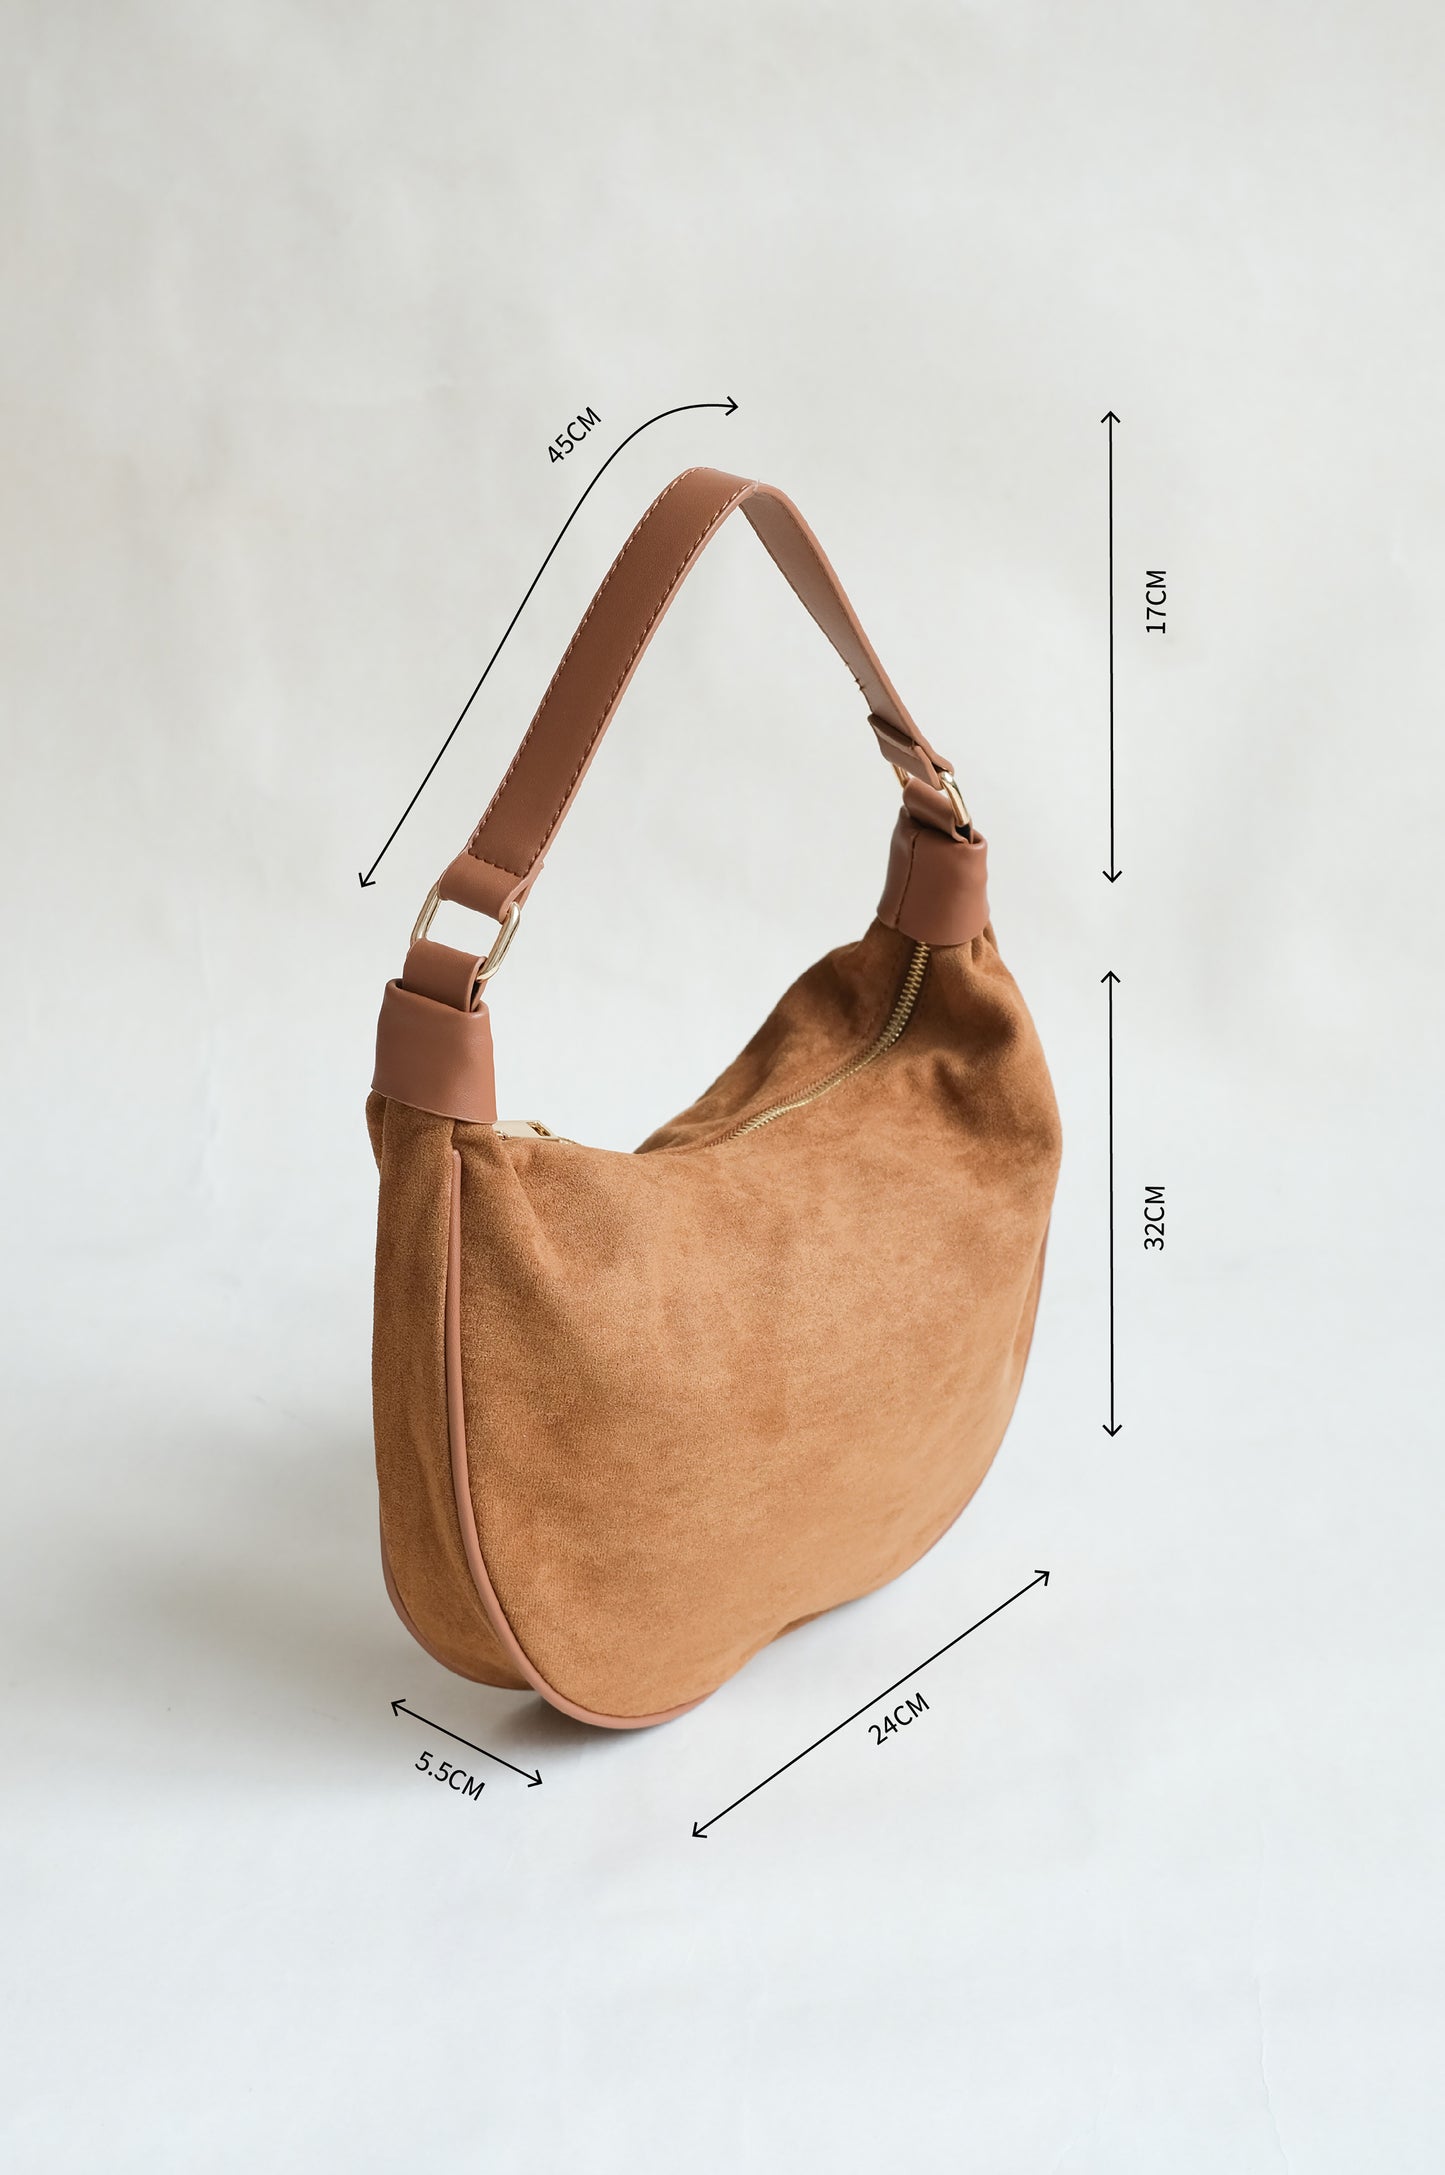 Underarm saddle dumpling bag in brown color